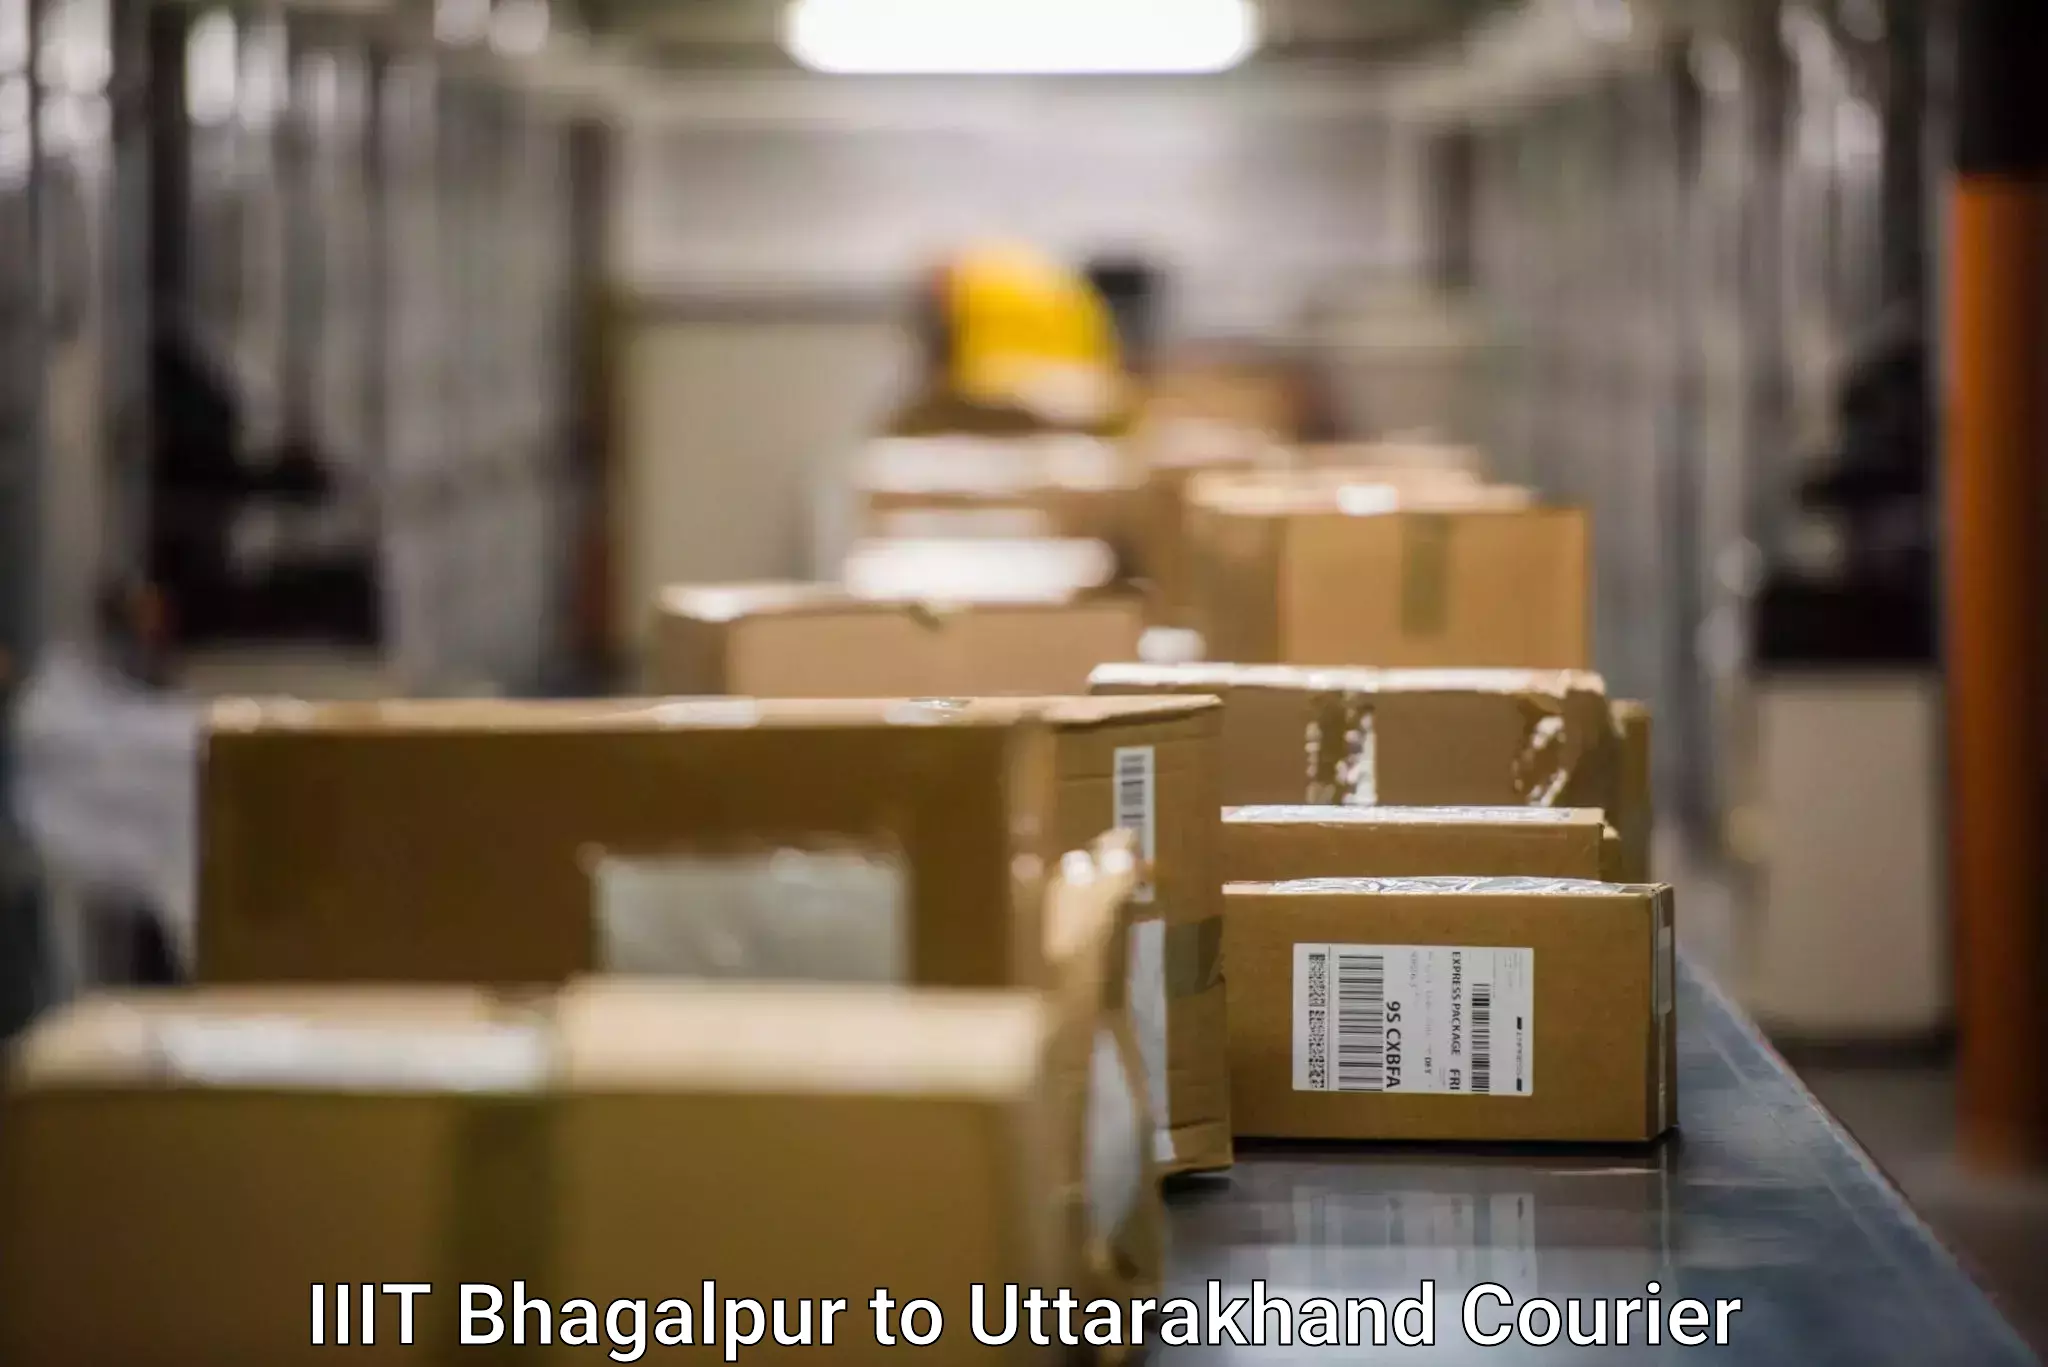 Express delivery capabilities IIIT Bhagalpur to Roorkee